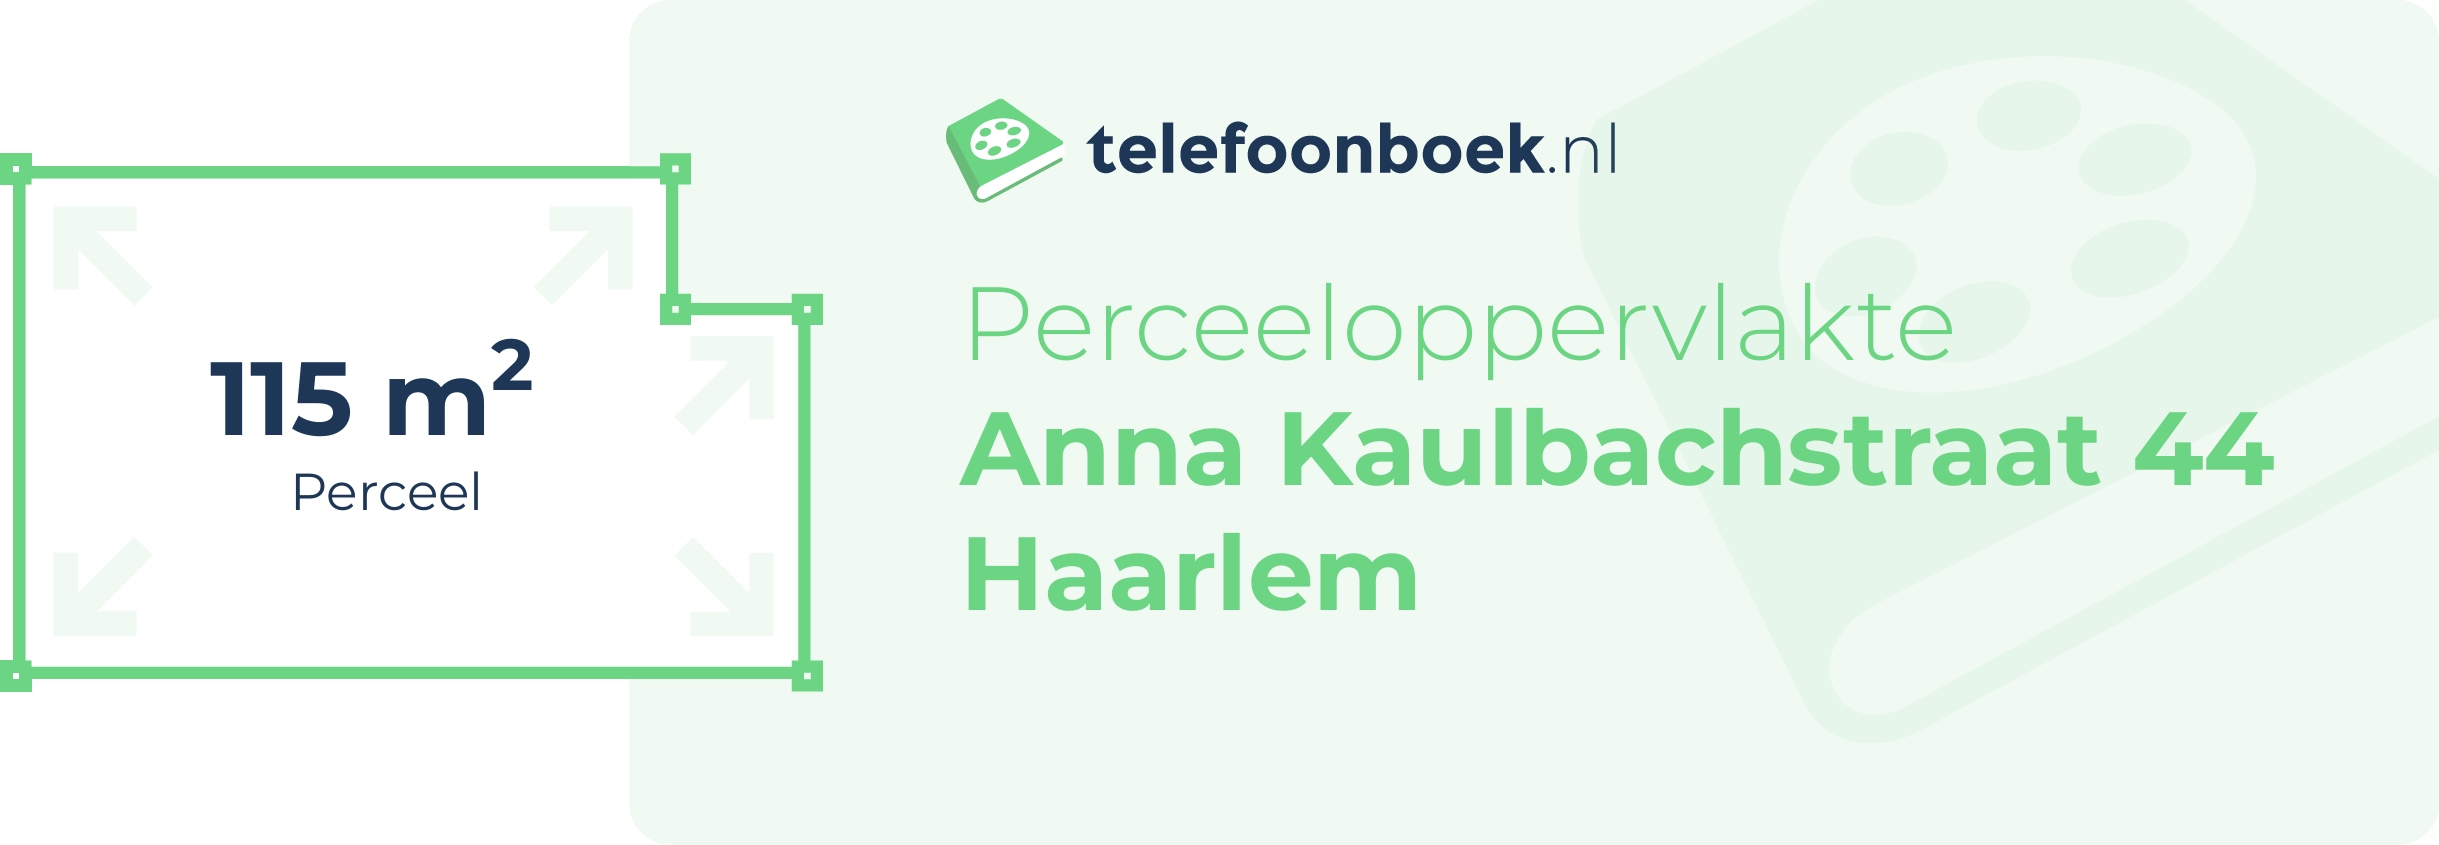 Perceeloppervlakte Anna Kaulbachstraat 44 Haarlem